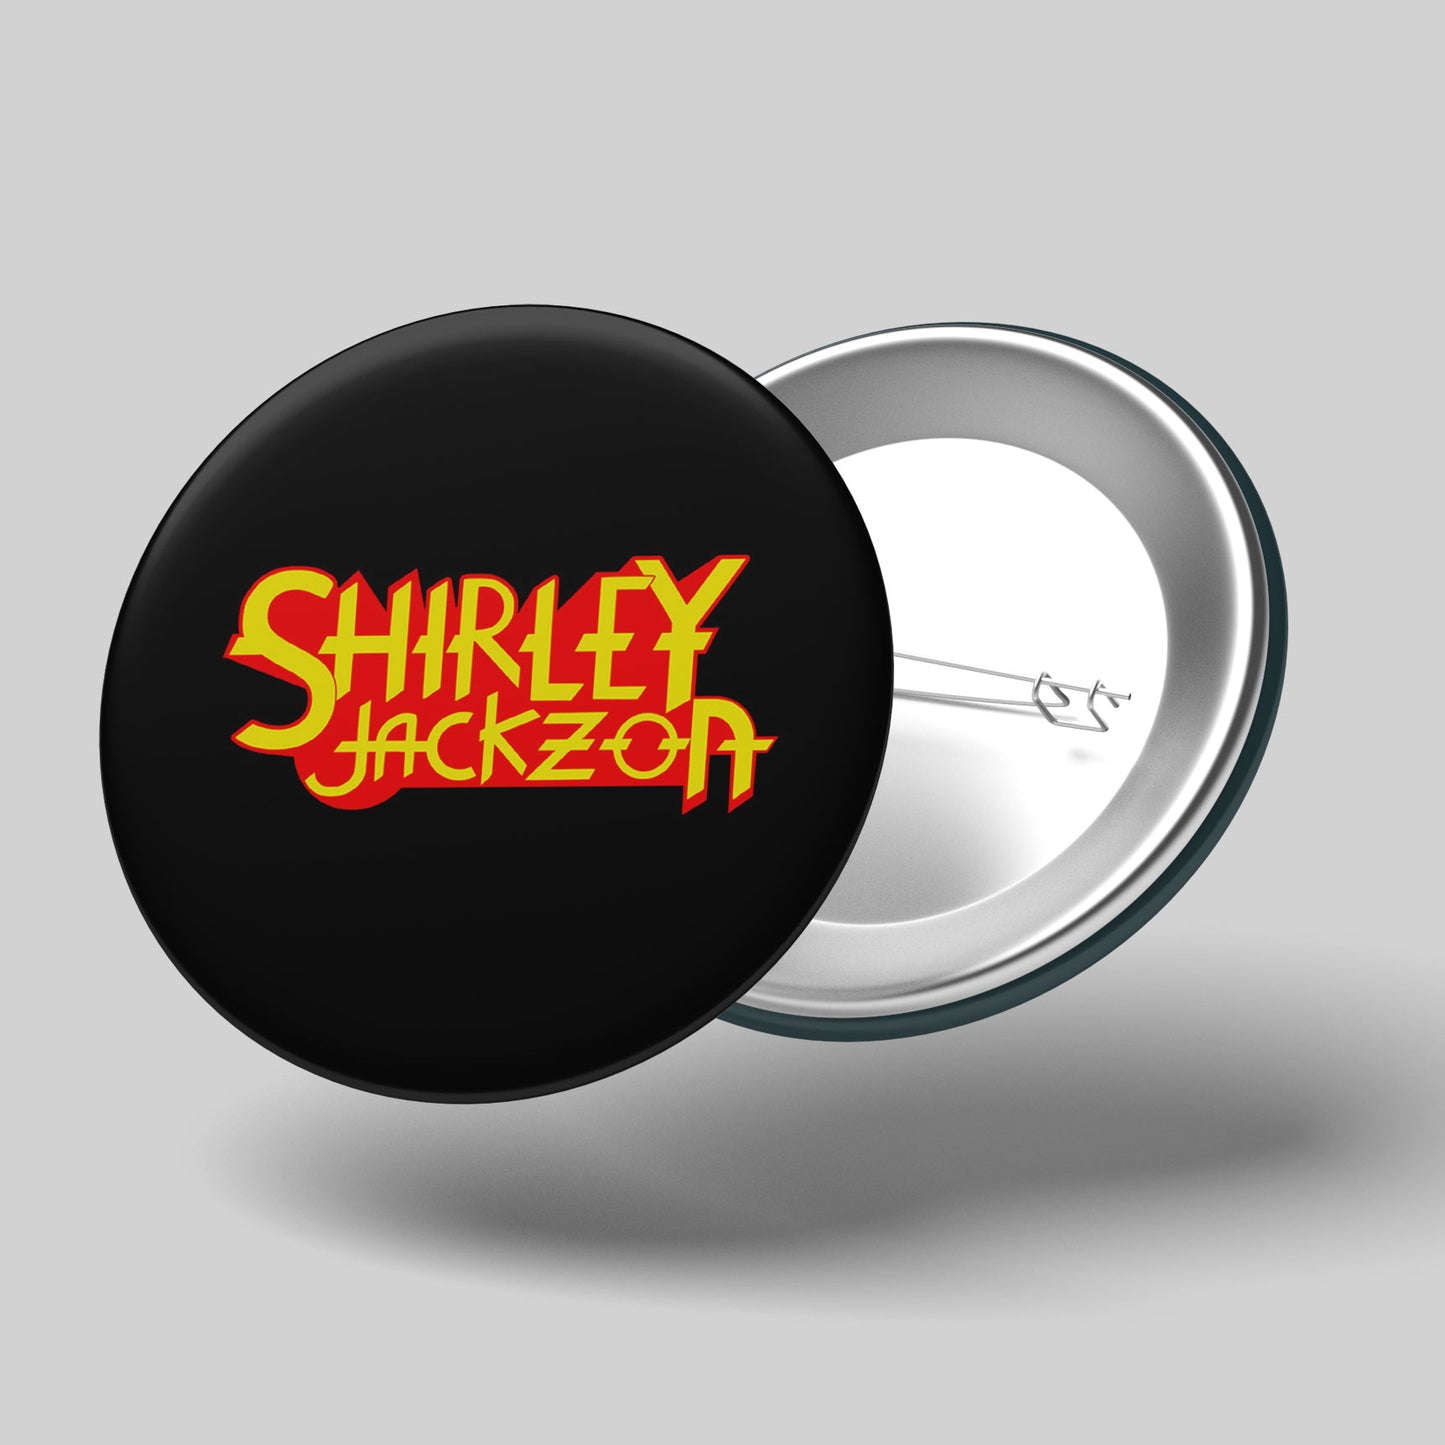 Shirley is a Head Banger button